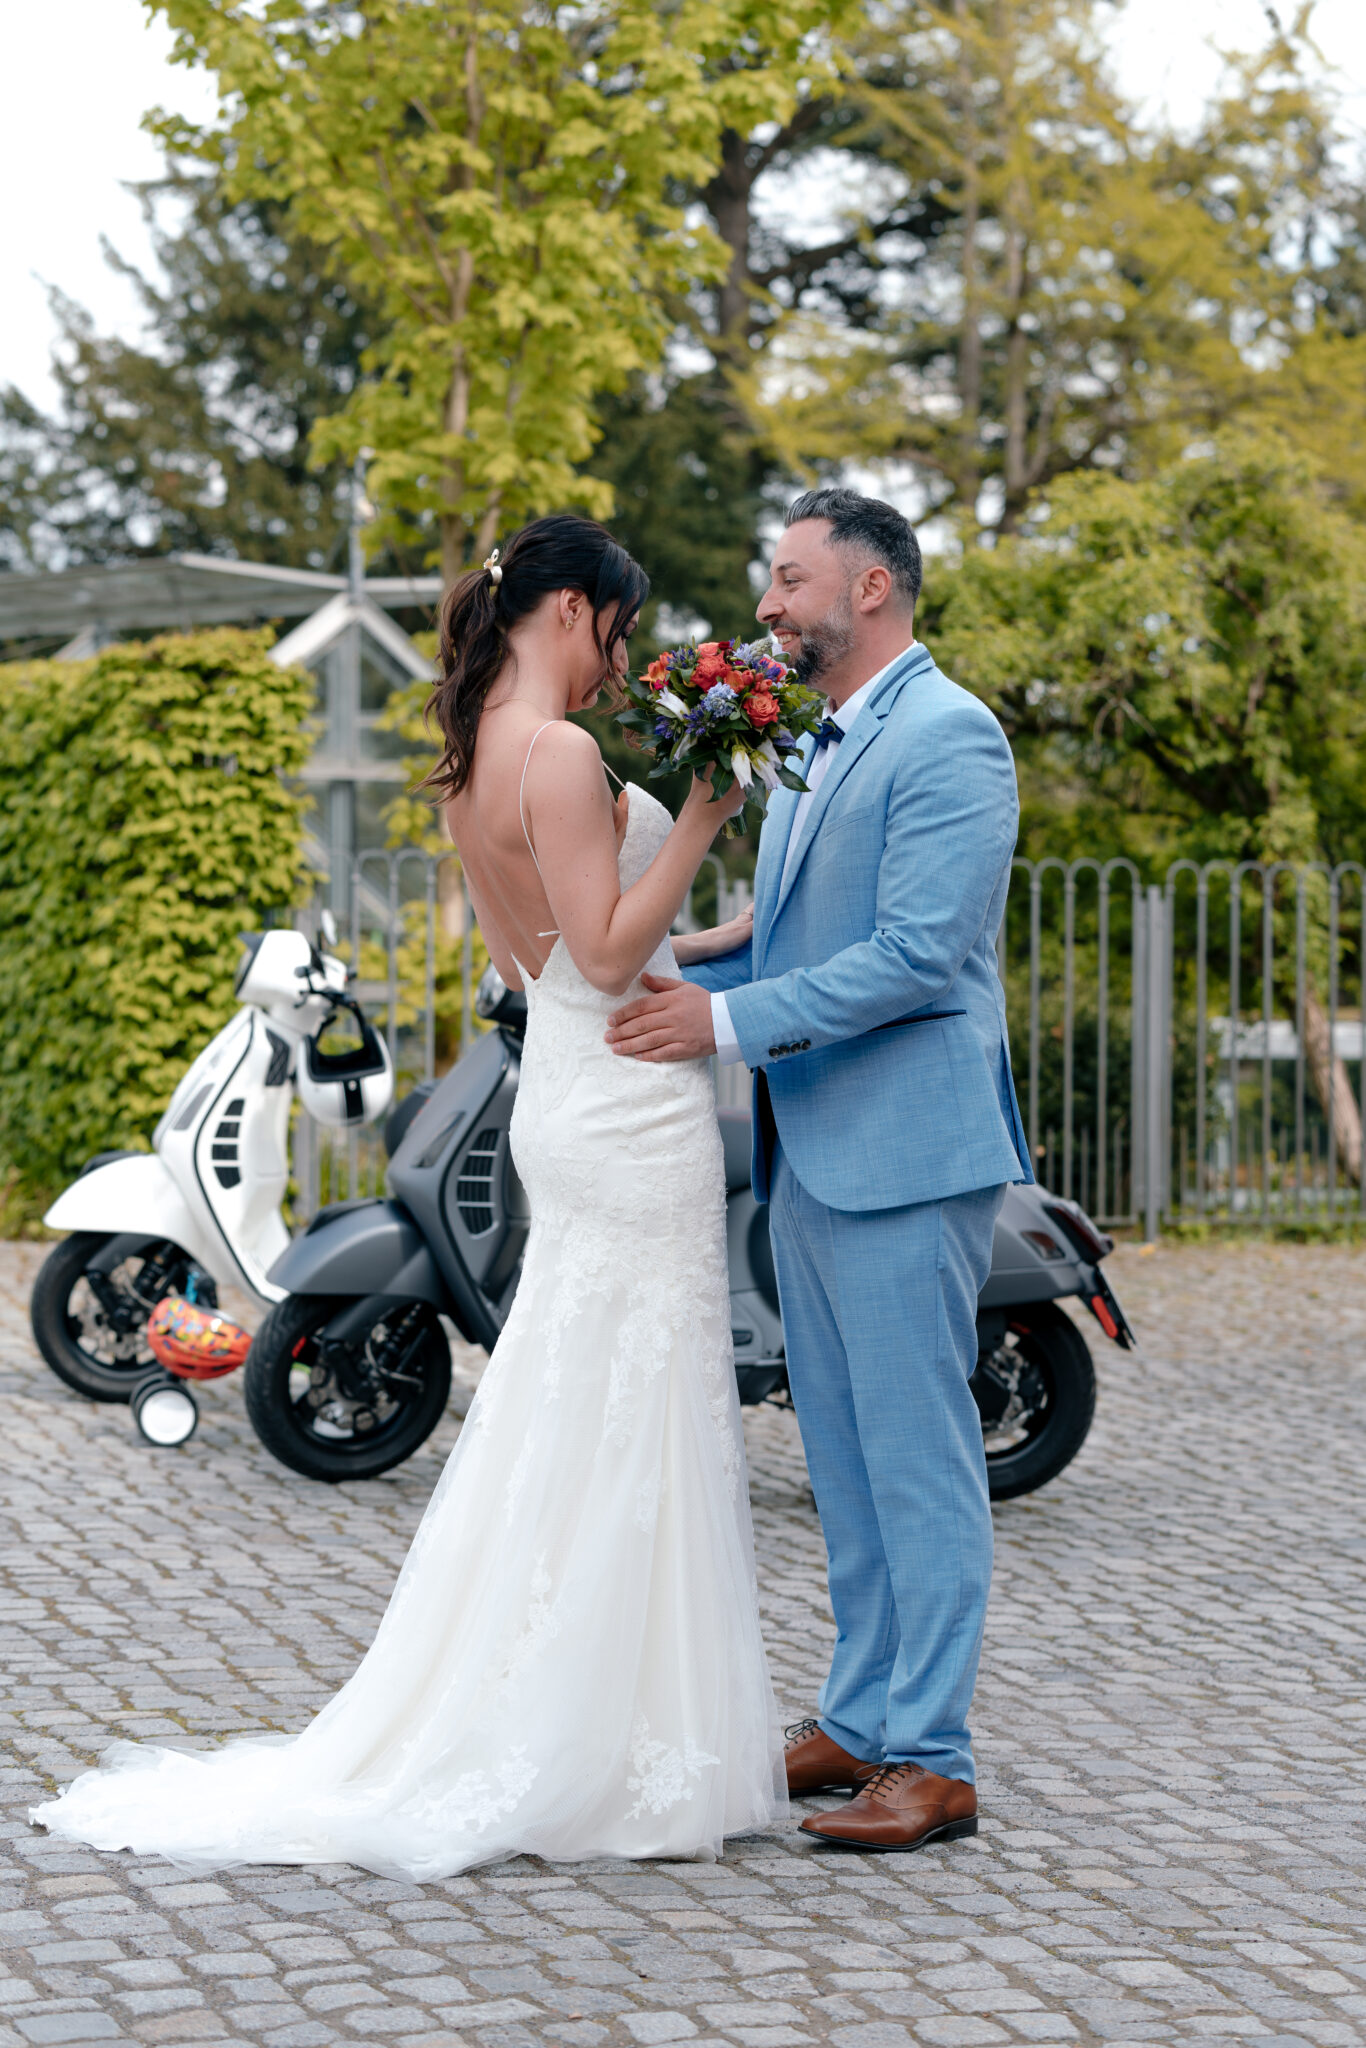 Laura & Marco - zauberhafte Hochzeit in Wuppertal